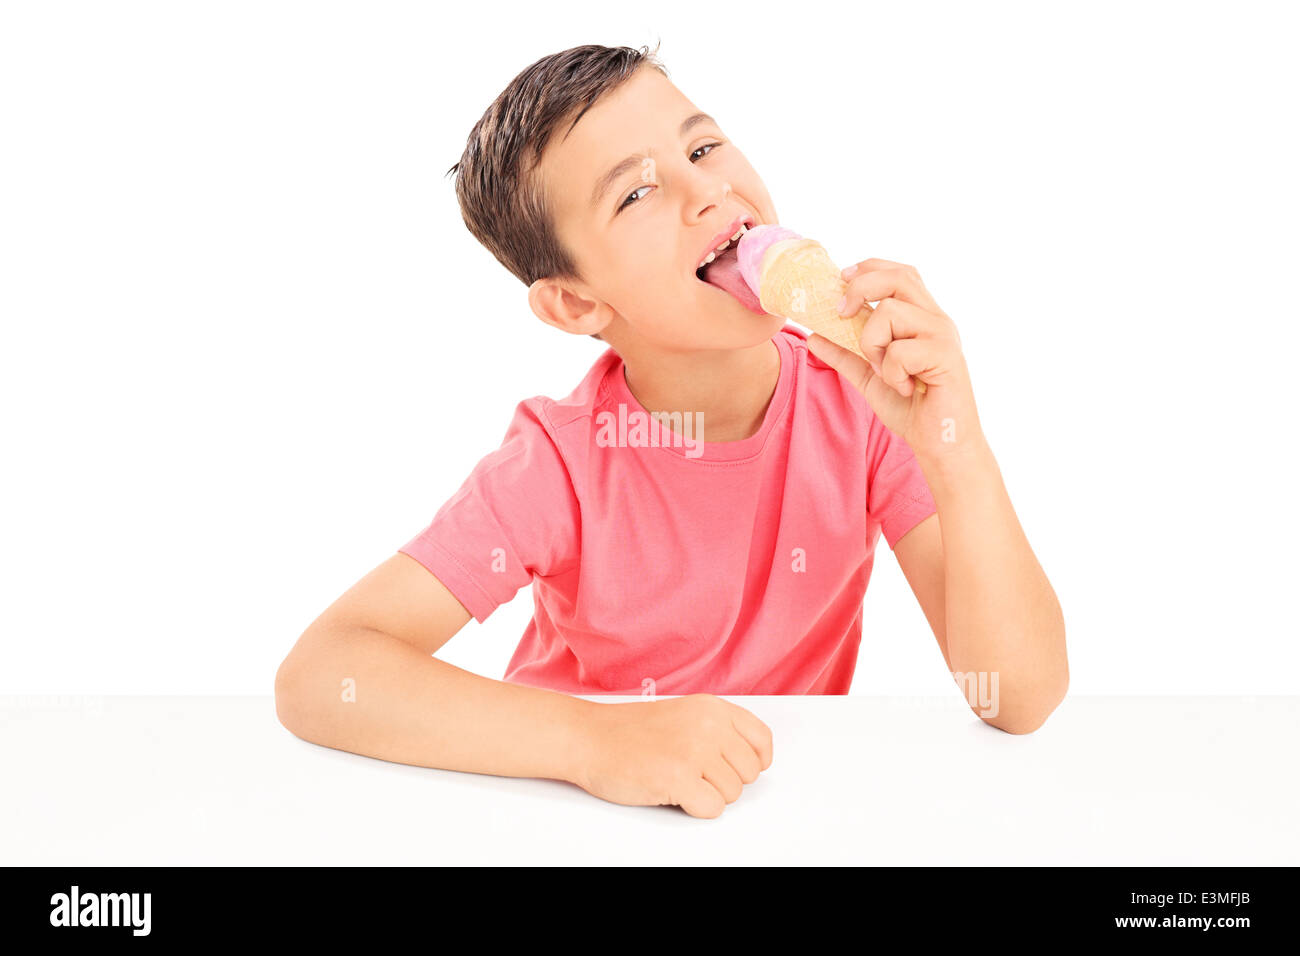 Joyful little boy eating an ice cream seated at a table Stock Photo